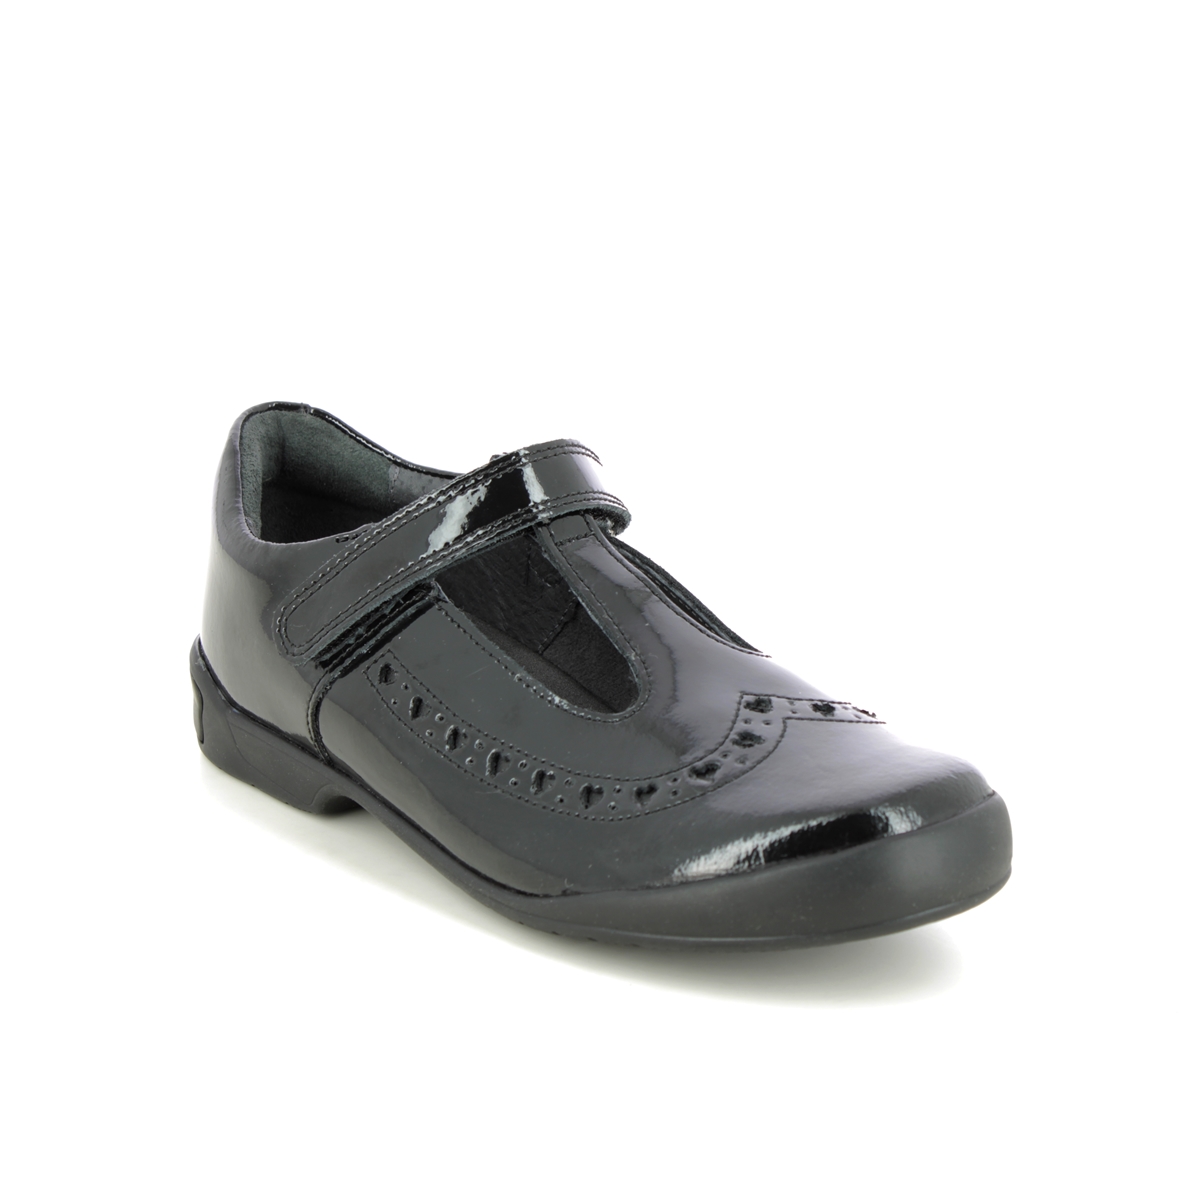 Start Rite - Leapfrog In Black Patent 278937G In Size 12.5 In Plain Black Patent For School Girls Shoes  In Black Patent For kids